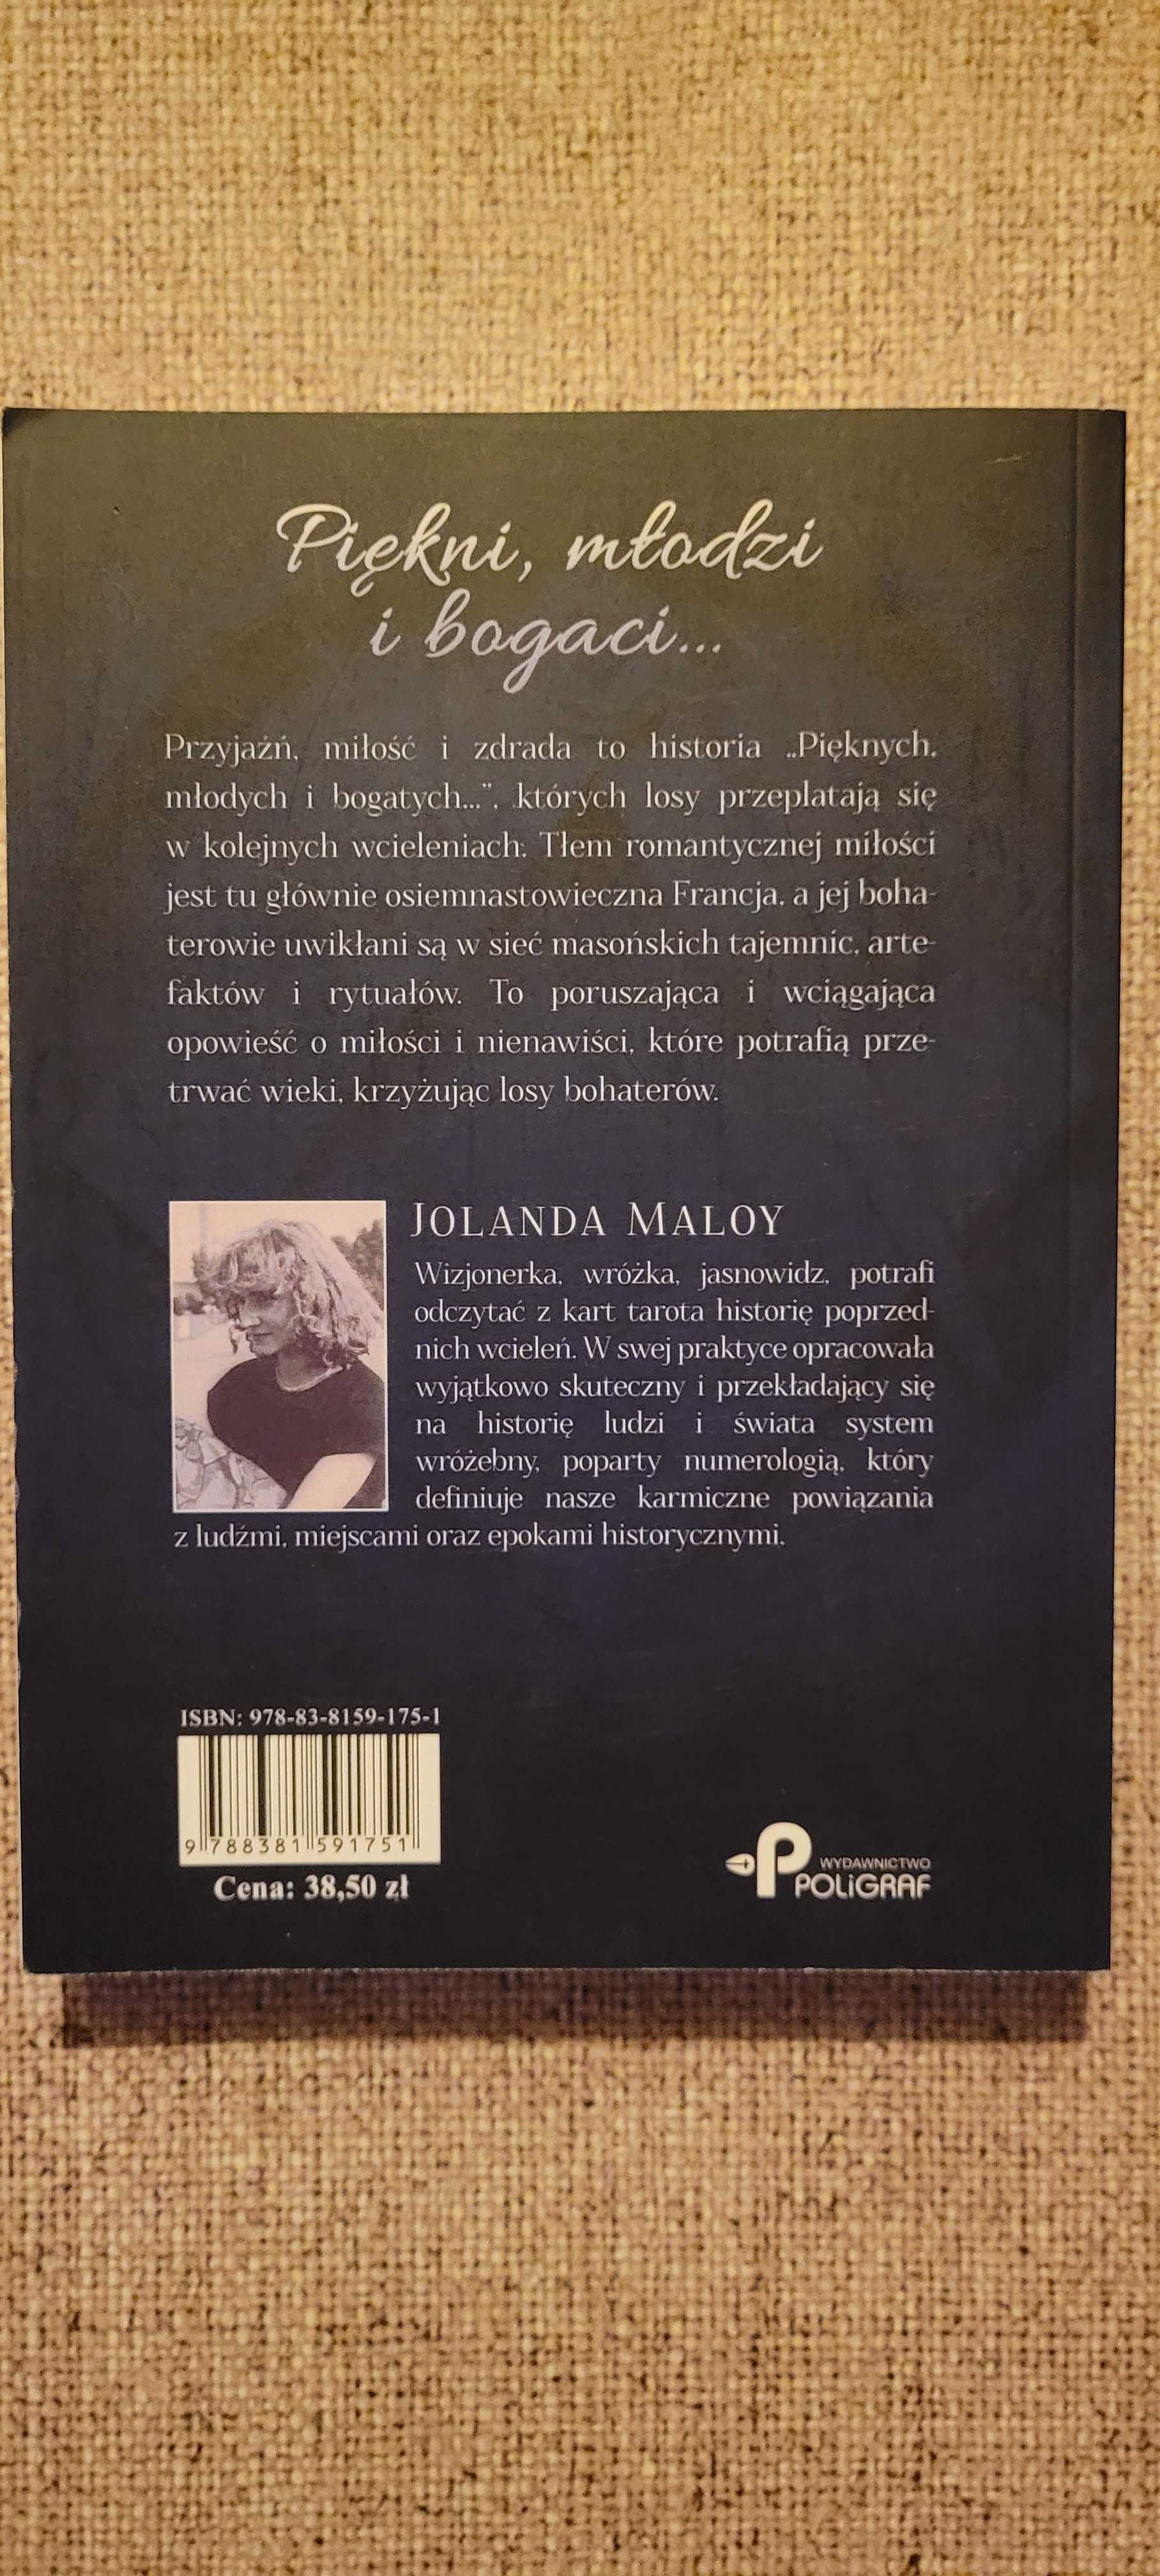 Romans historyczny "Piekni, mlodzi i bogaci..." autor Jolanda Maloy.